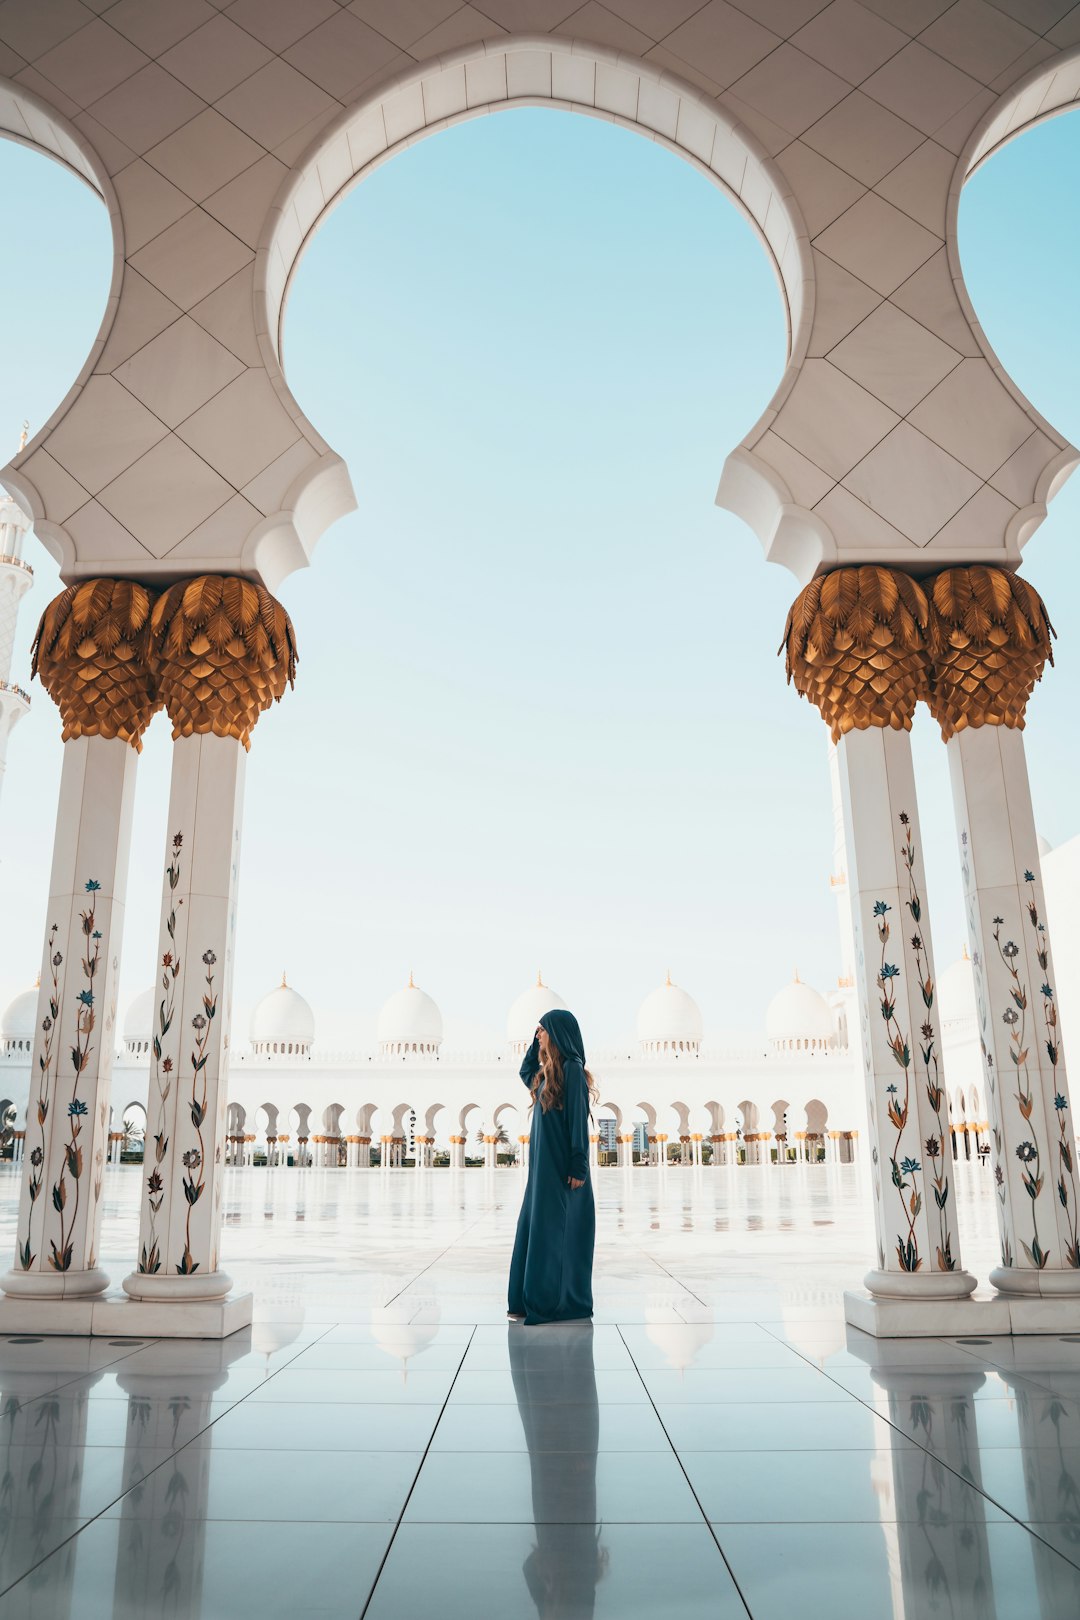 Mosque photo spot Abu Dhabi Abu Dhabi - United Arab Emirates